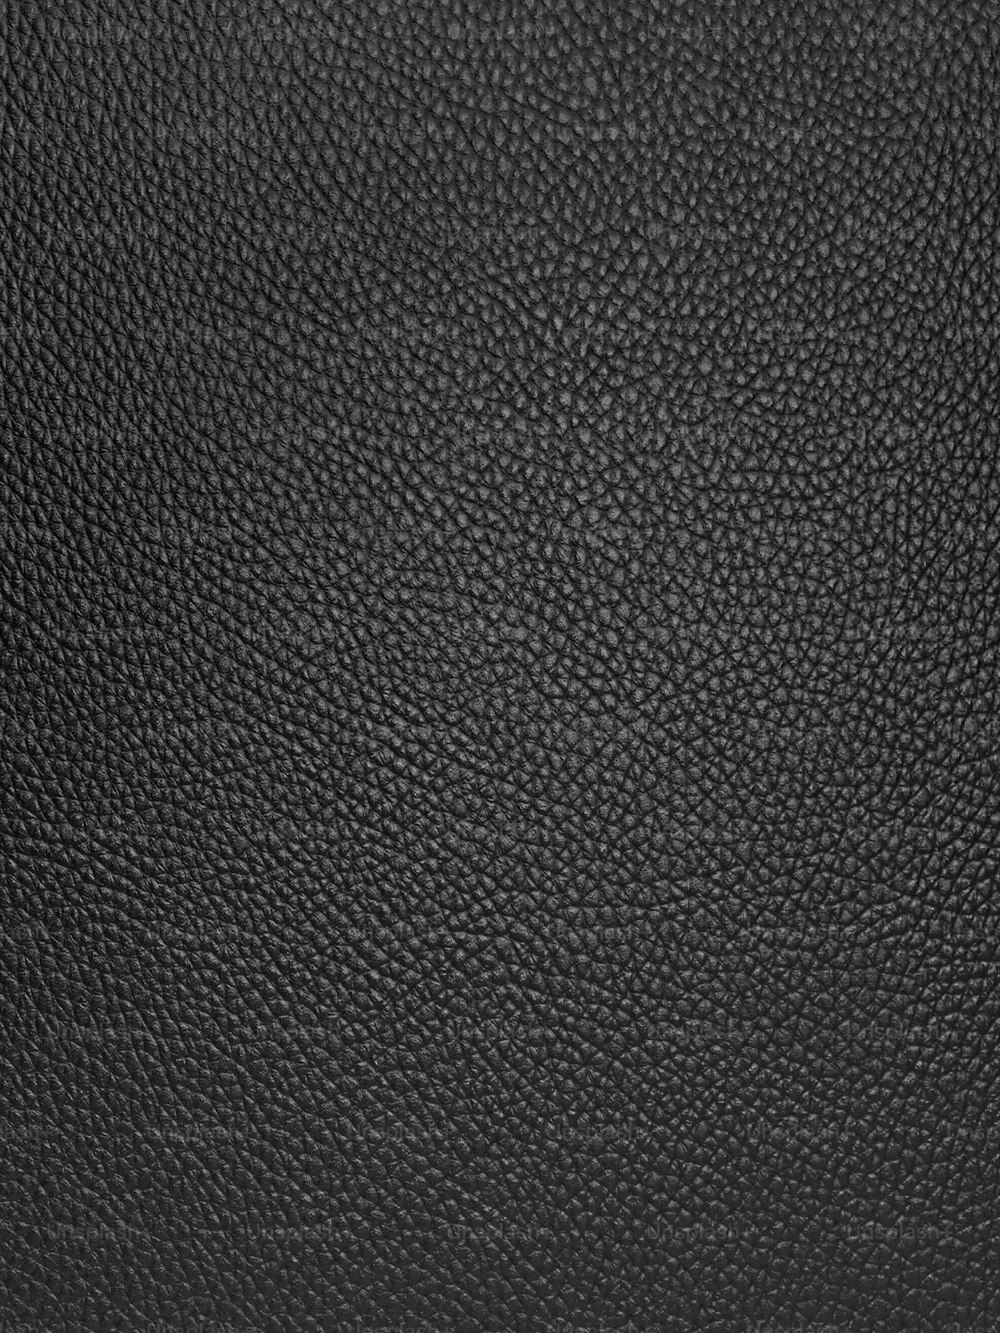 Premium Vector  Seamless leather texture